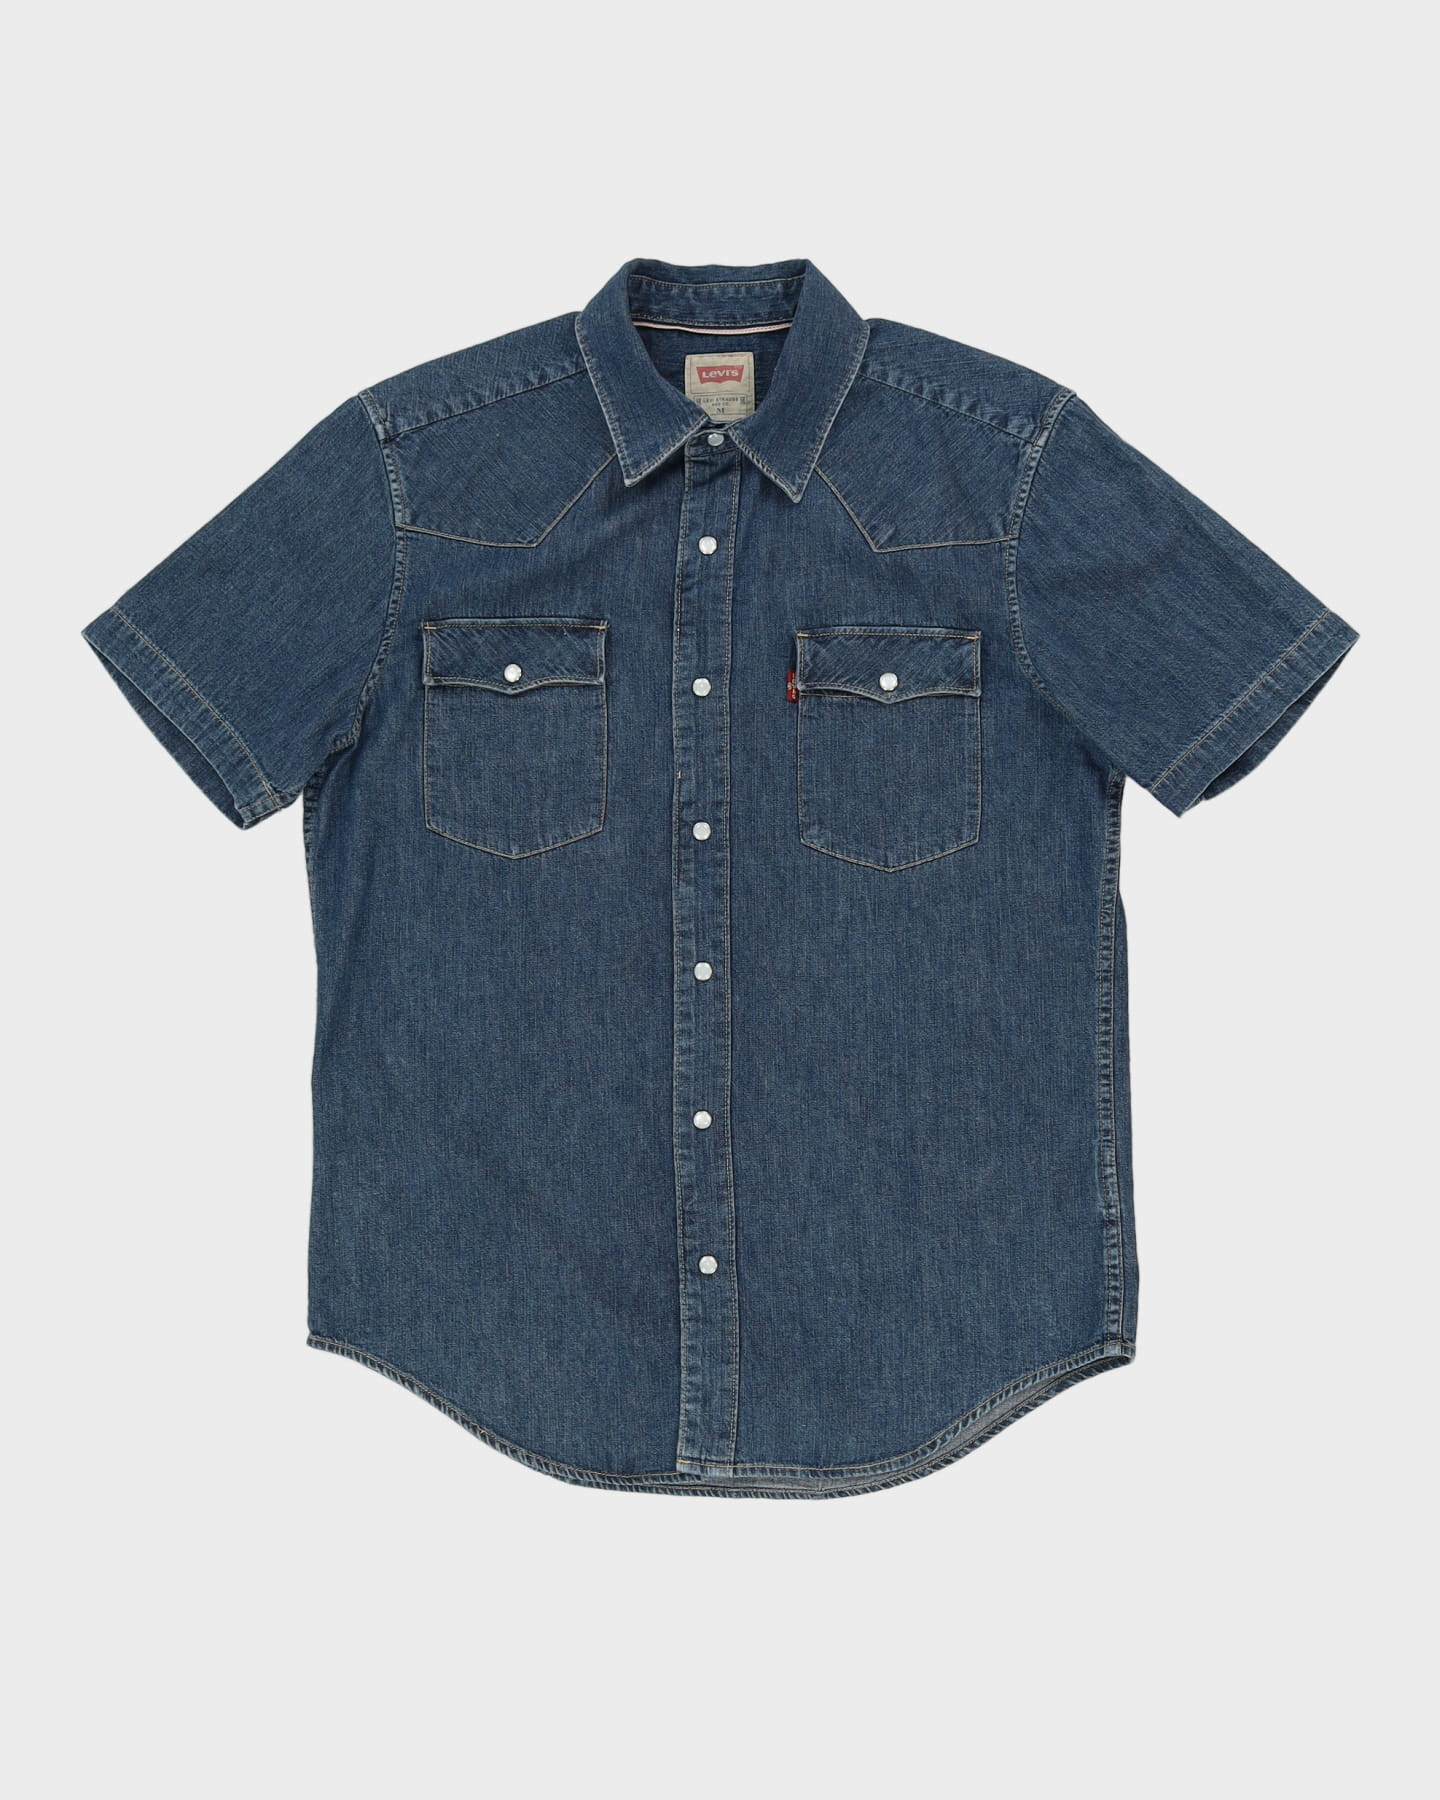 Levi's Blue Western Denim Shirt - M